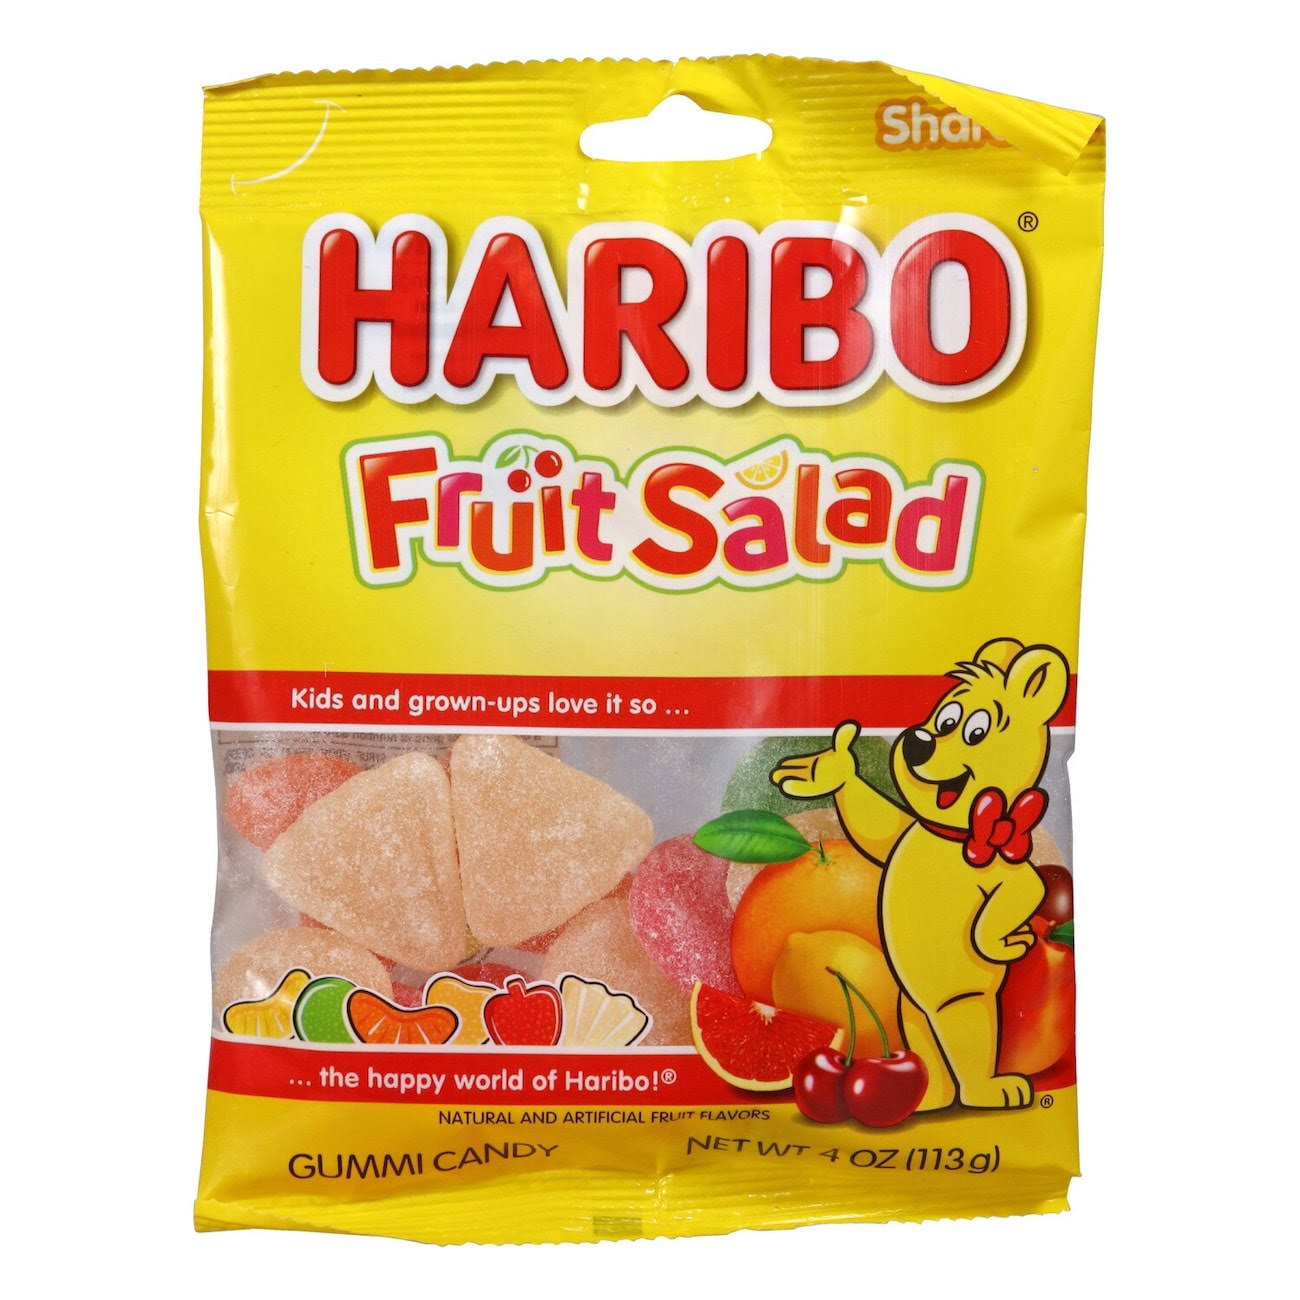 Haribo - Fruit Salad Gummi Candy, 4 oz.